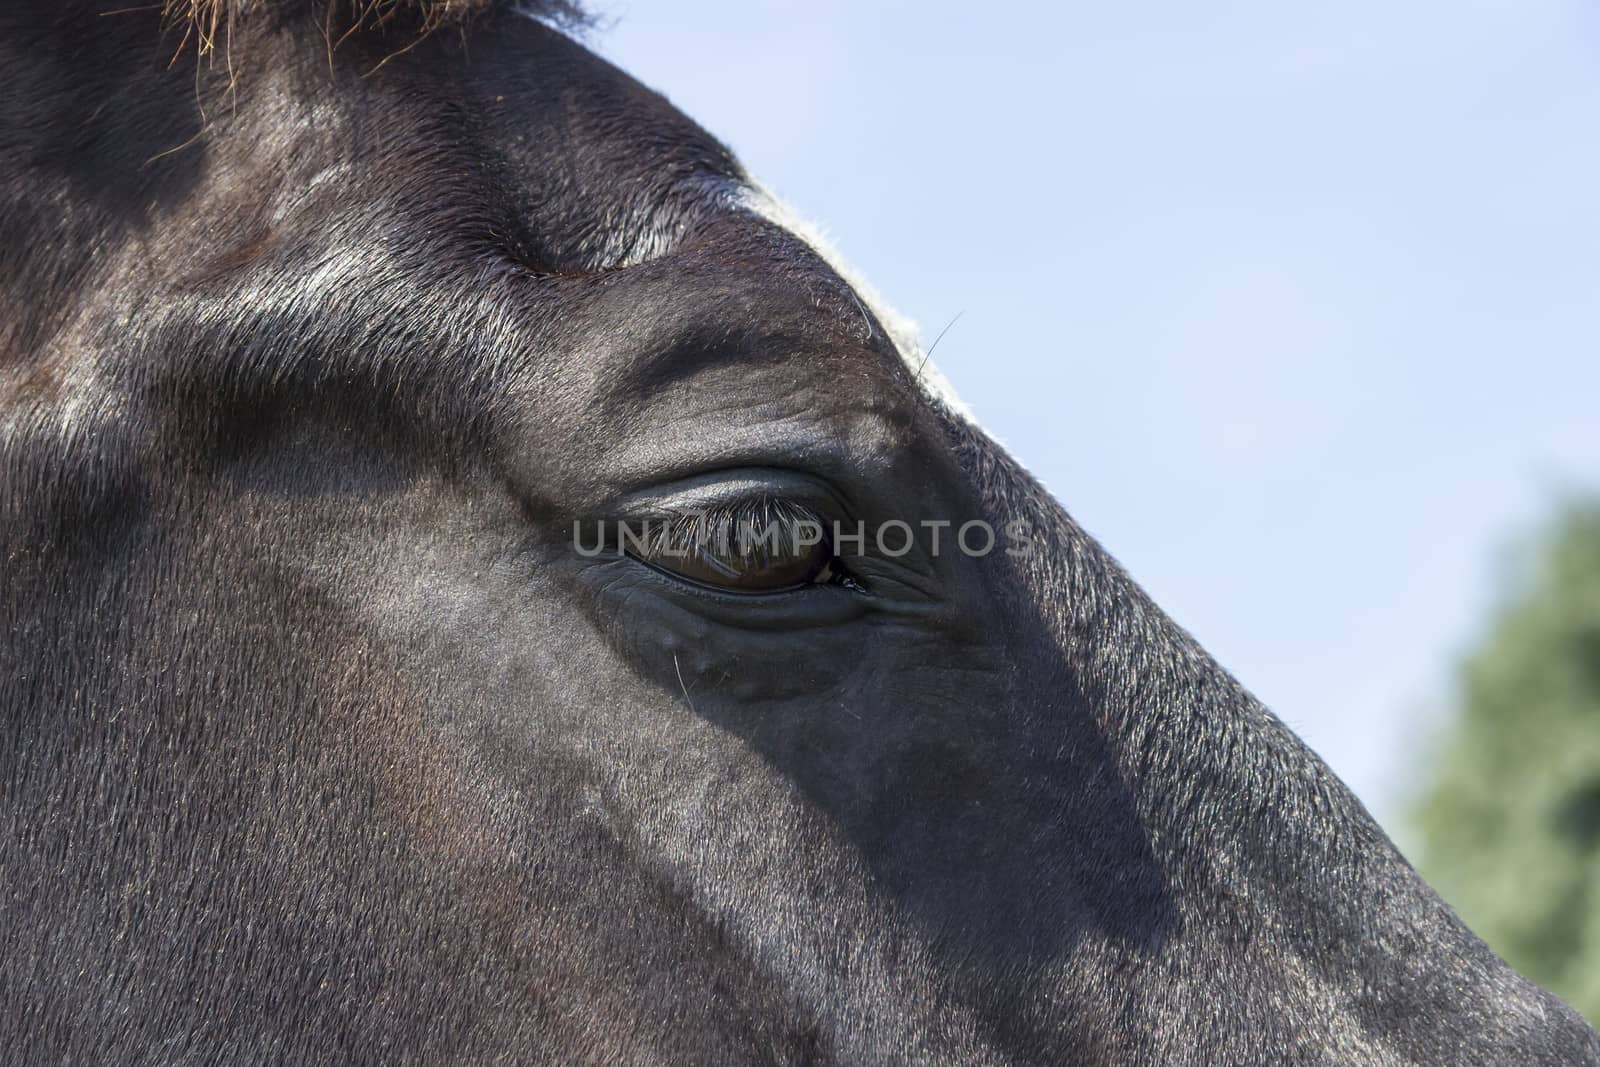 Eye of a black horse